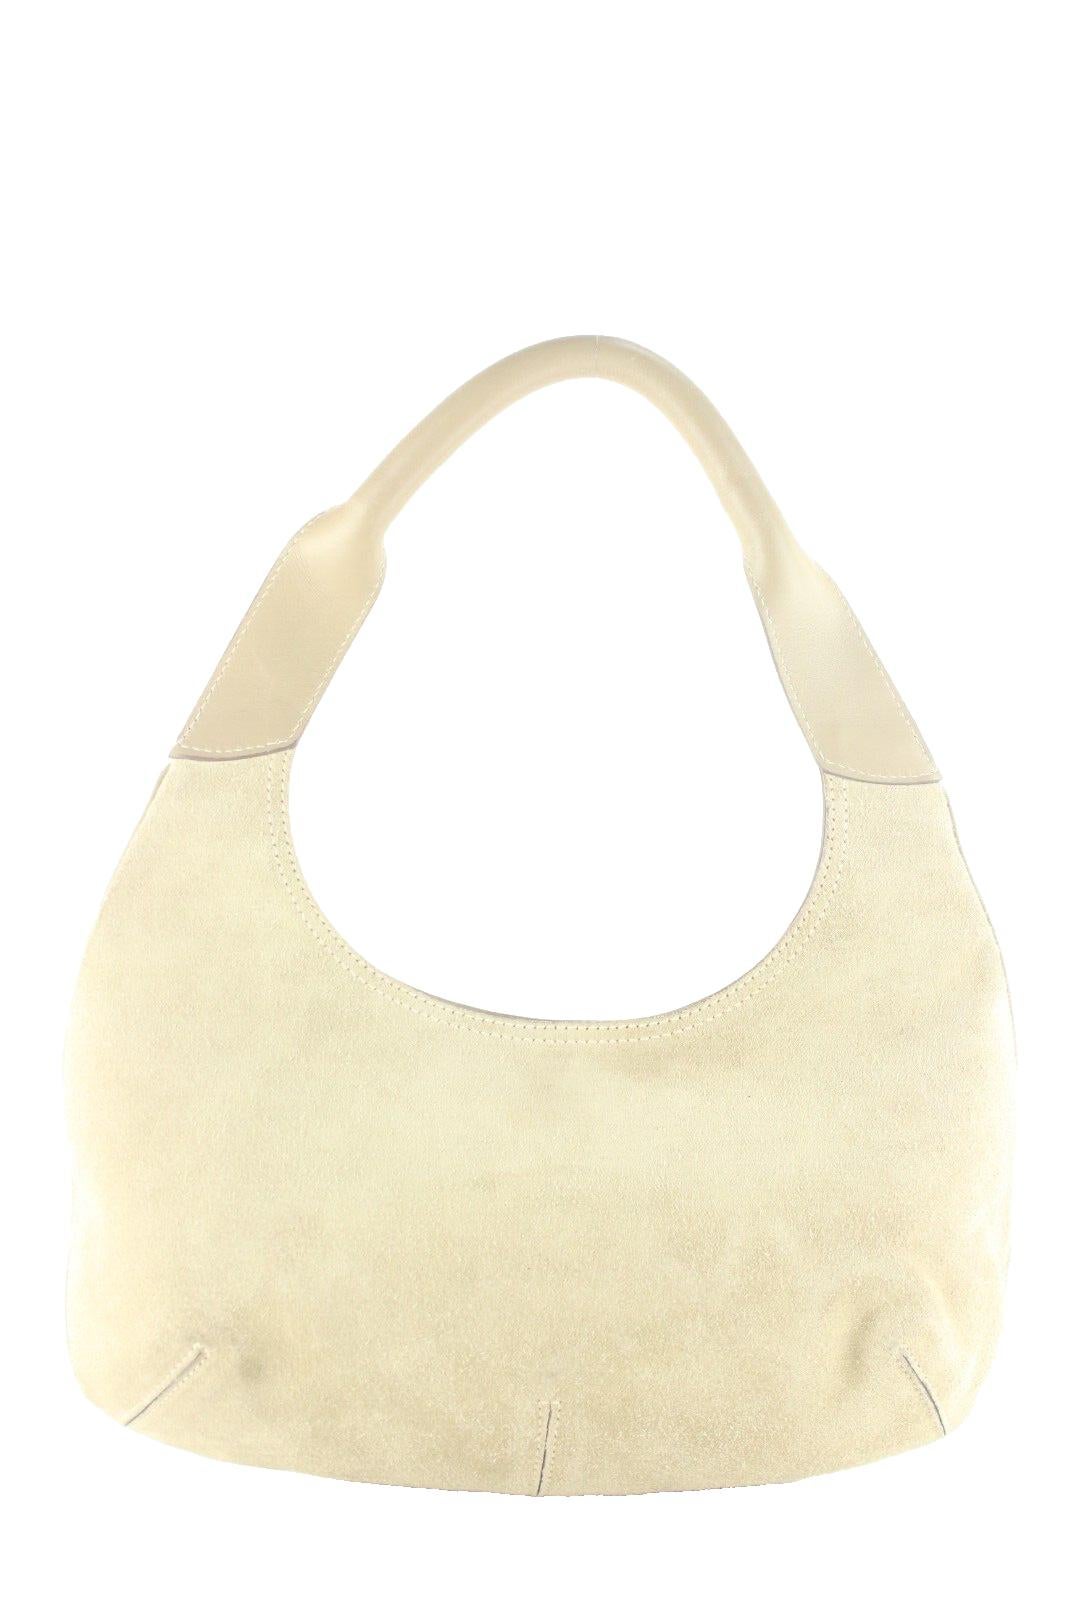 SALVATORE FERRAGAMO Beige Suede Hobo Classic Shoulder Bag 1SF1024K For Sale 6